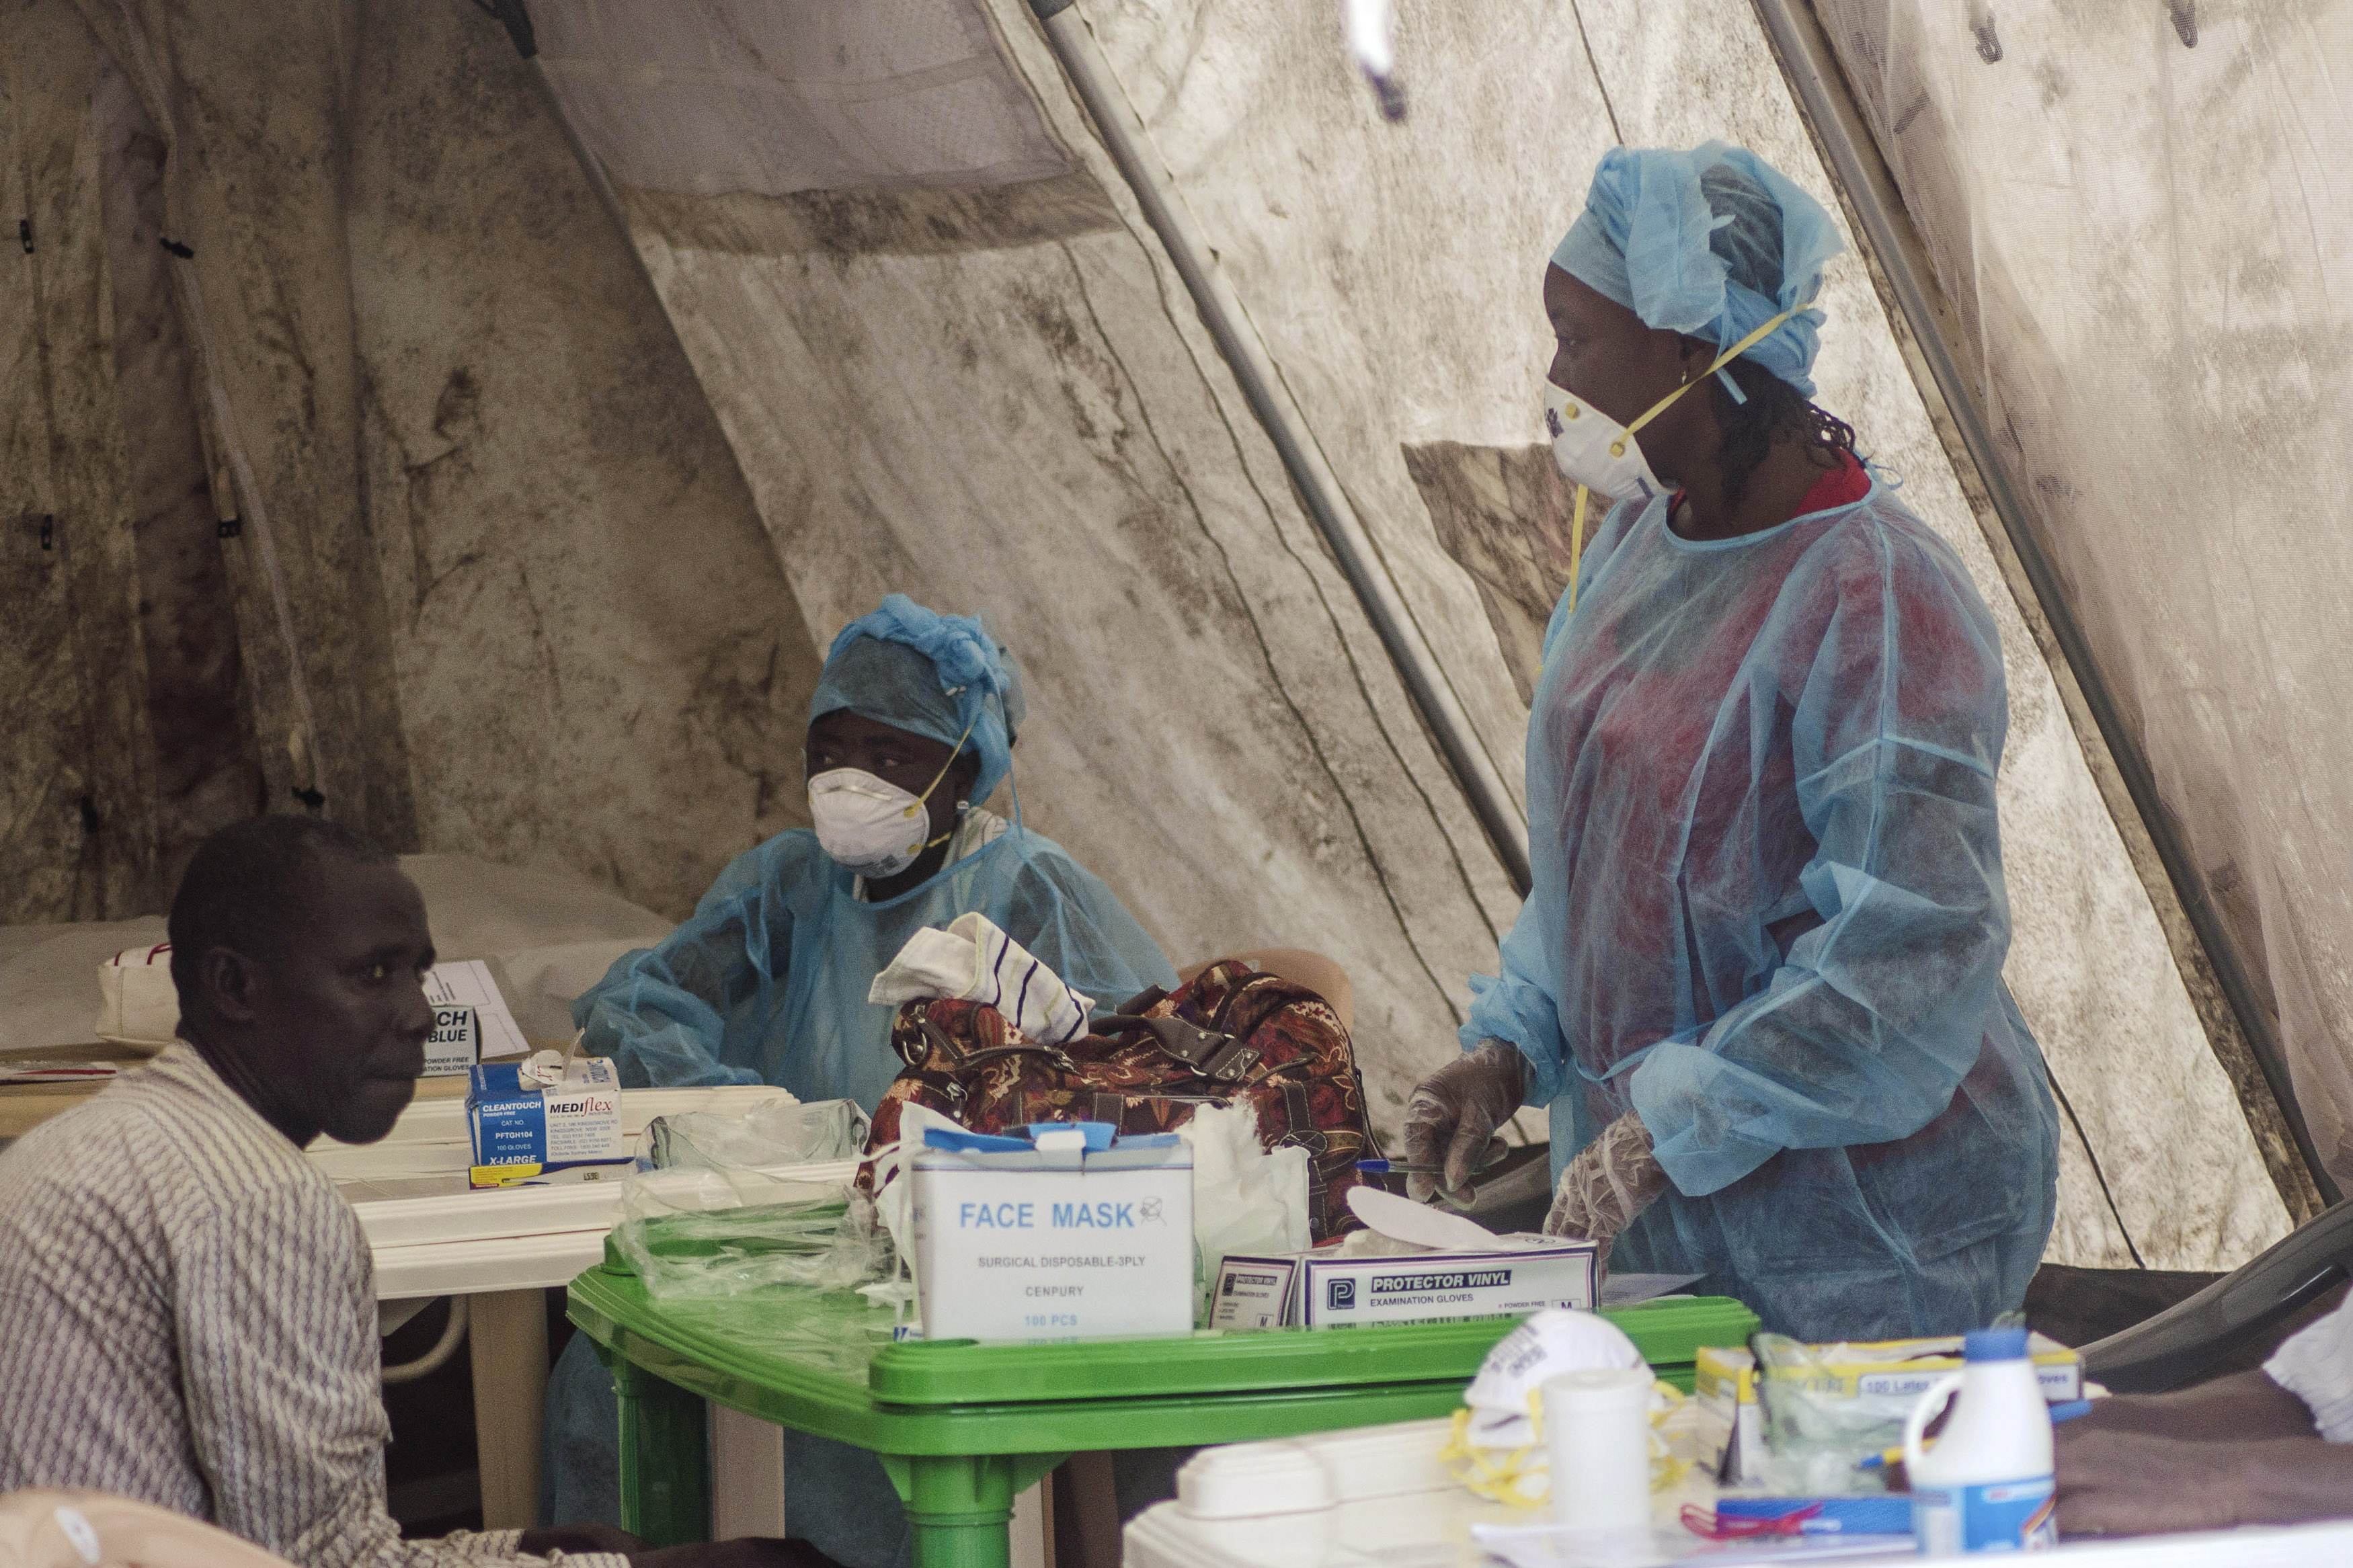 Doctor Leading Sierra Leone Efforts Against Ebola Hospitalized with Disease